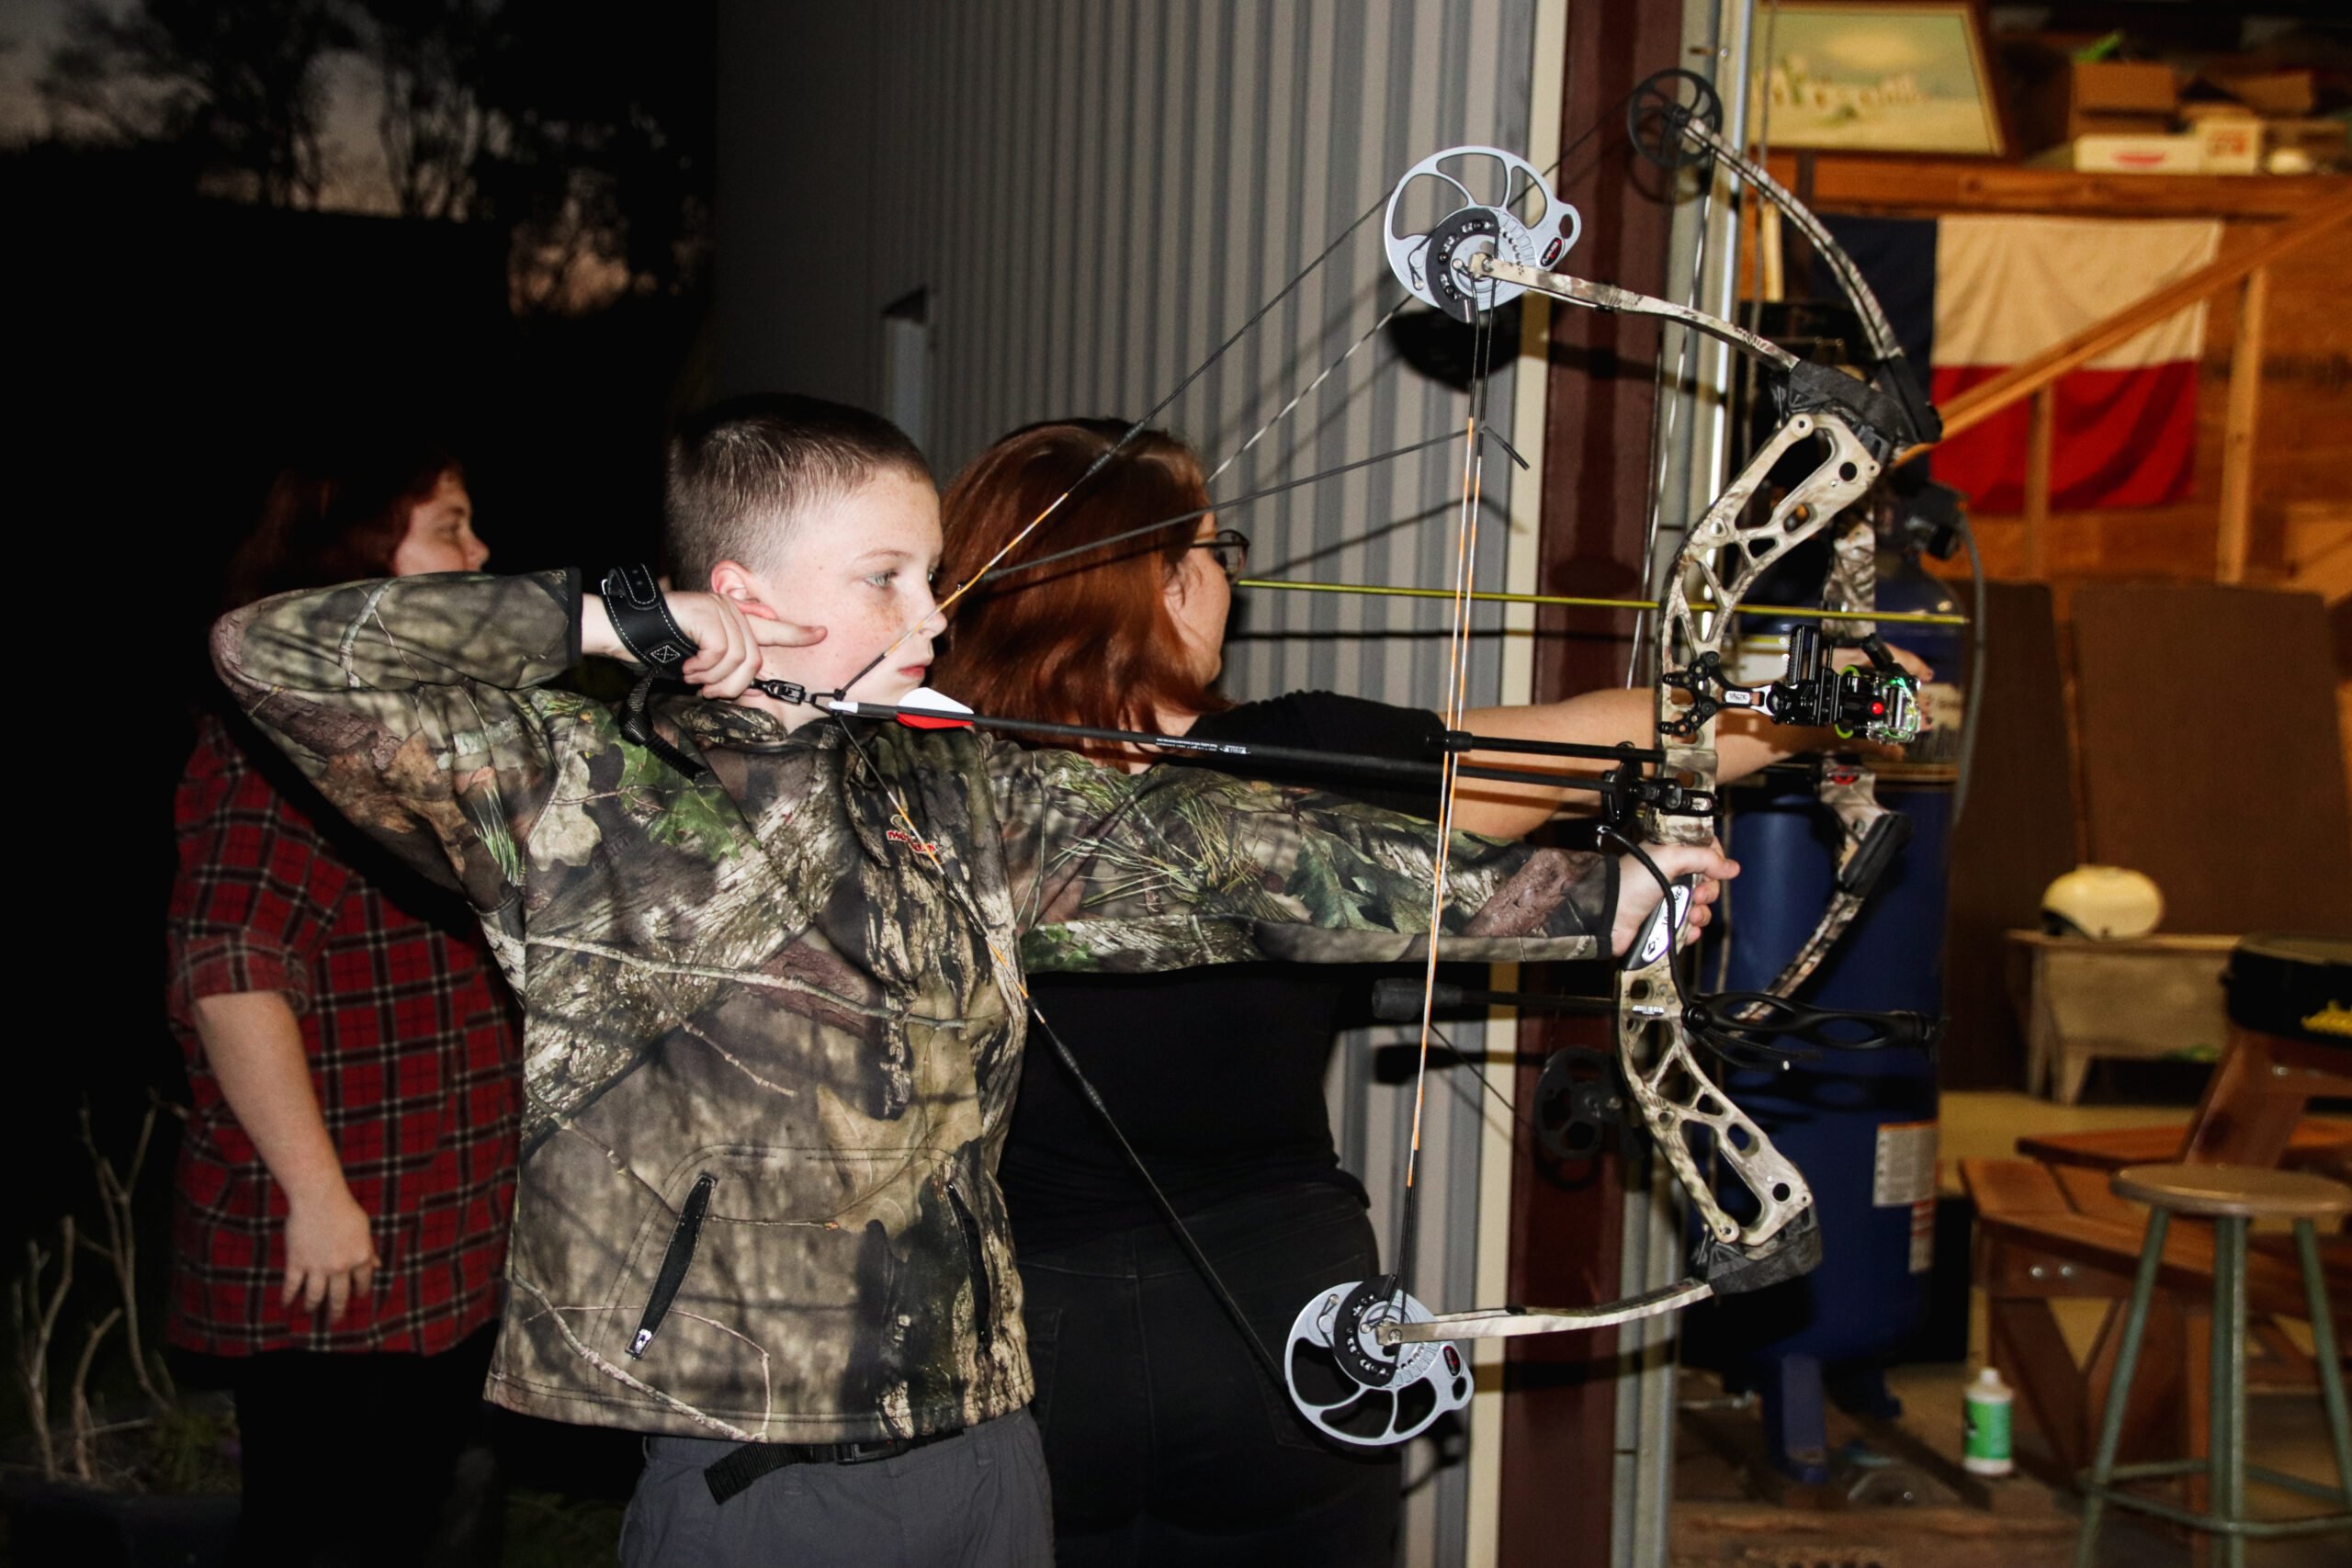 Hopkins archery aims for success